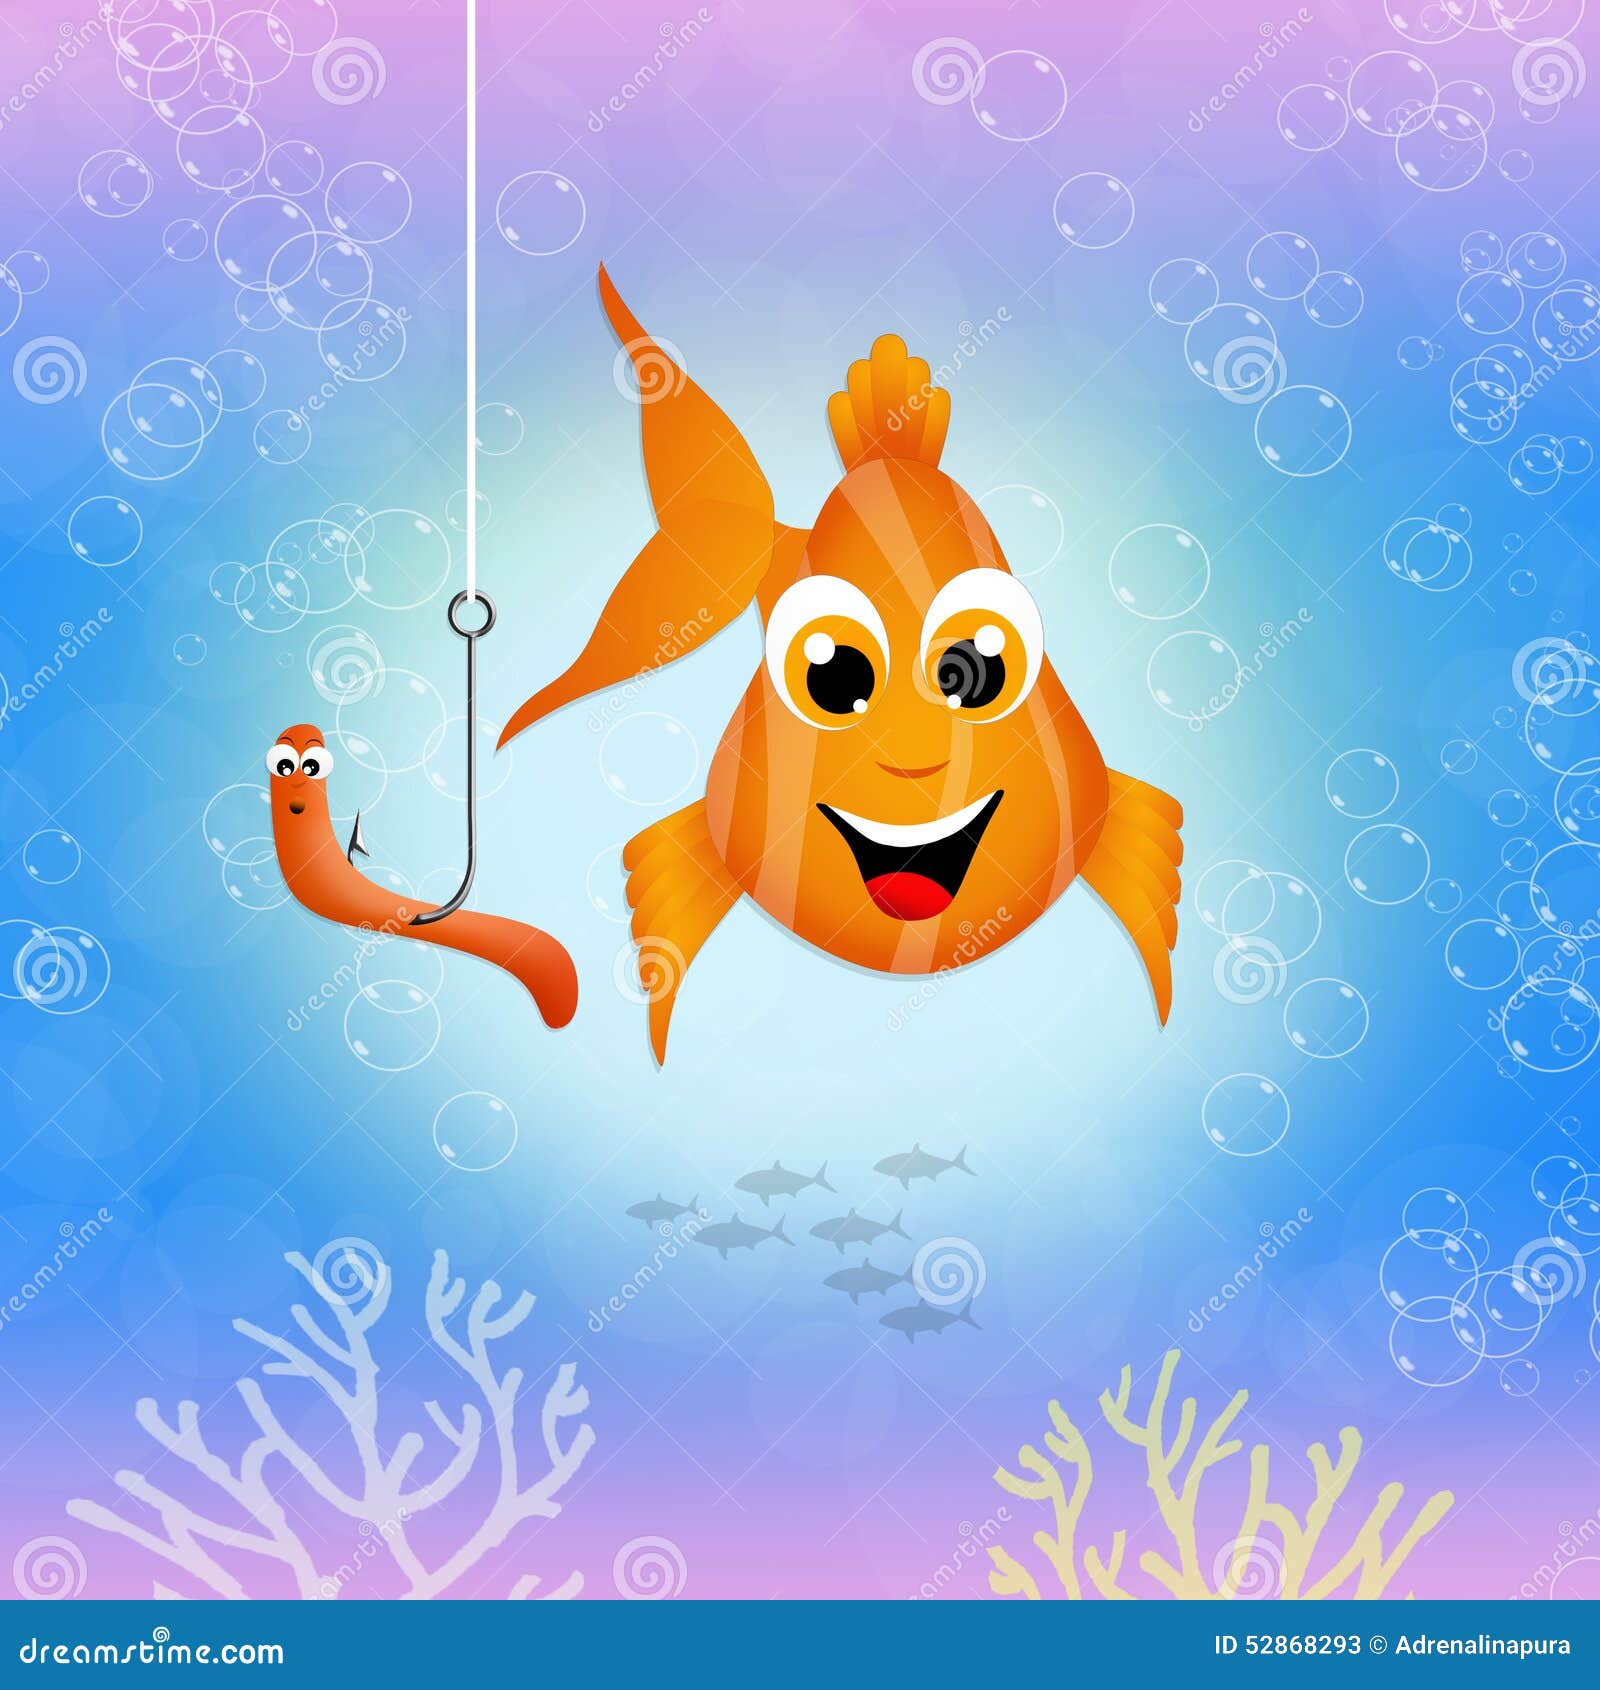 Fish bites the hook stock illustration. Illustration of smile - 52868293